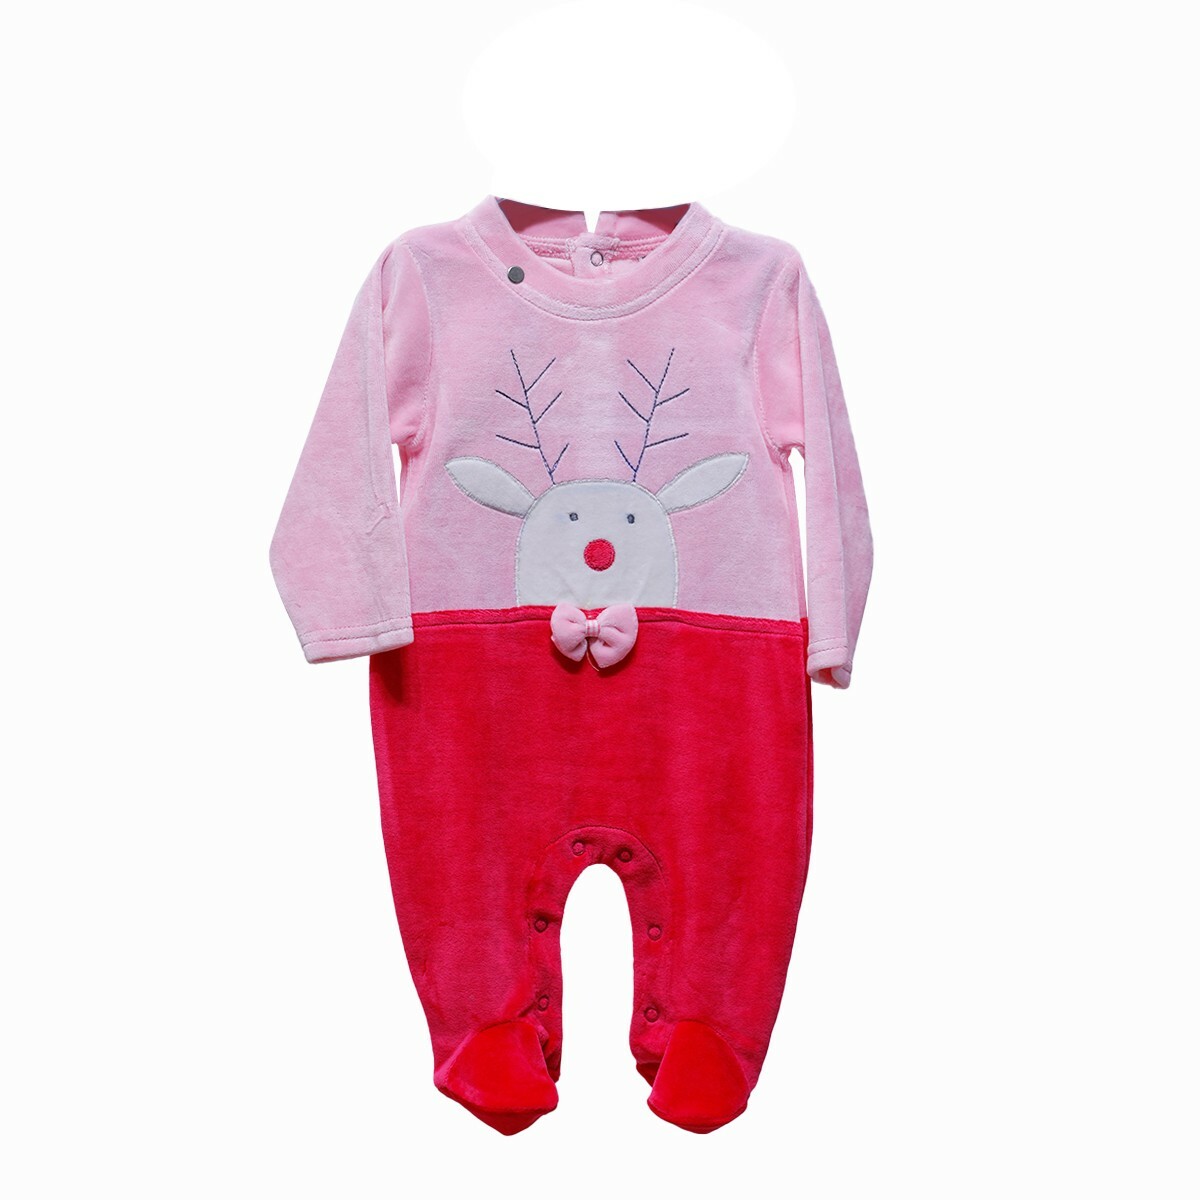 Wonder Child Full Sleeves Reindeer Design Footed Romper - Pink